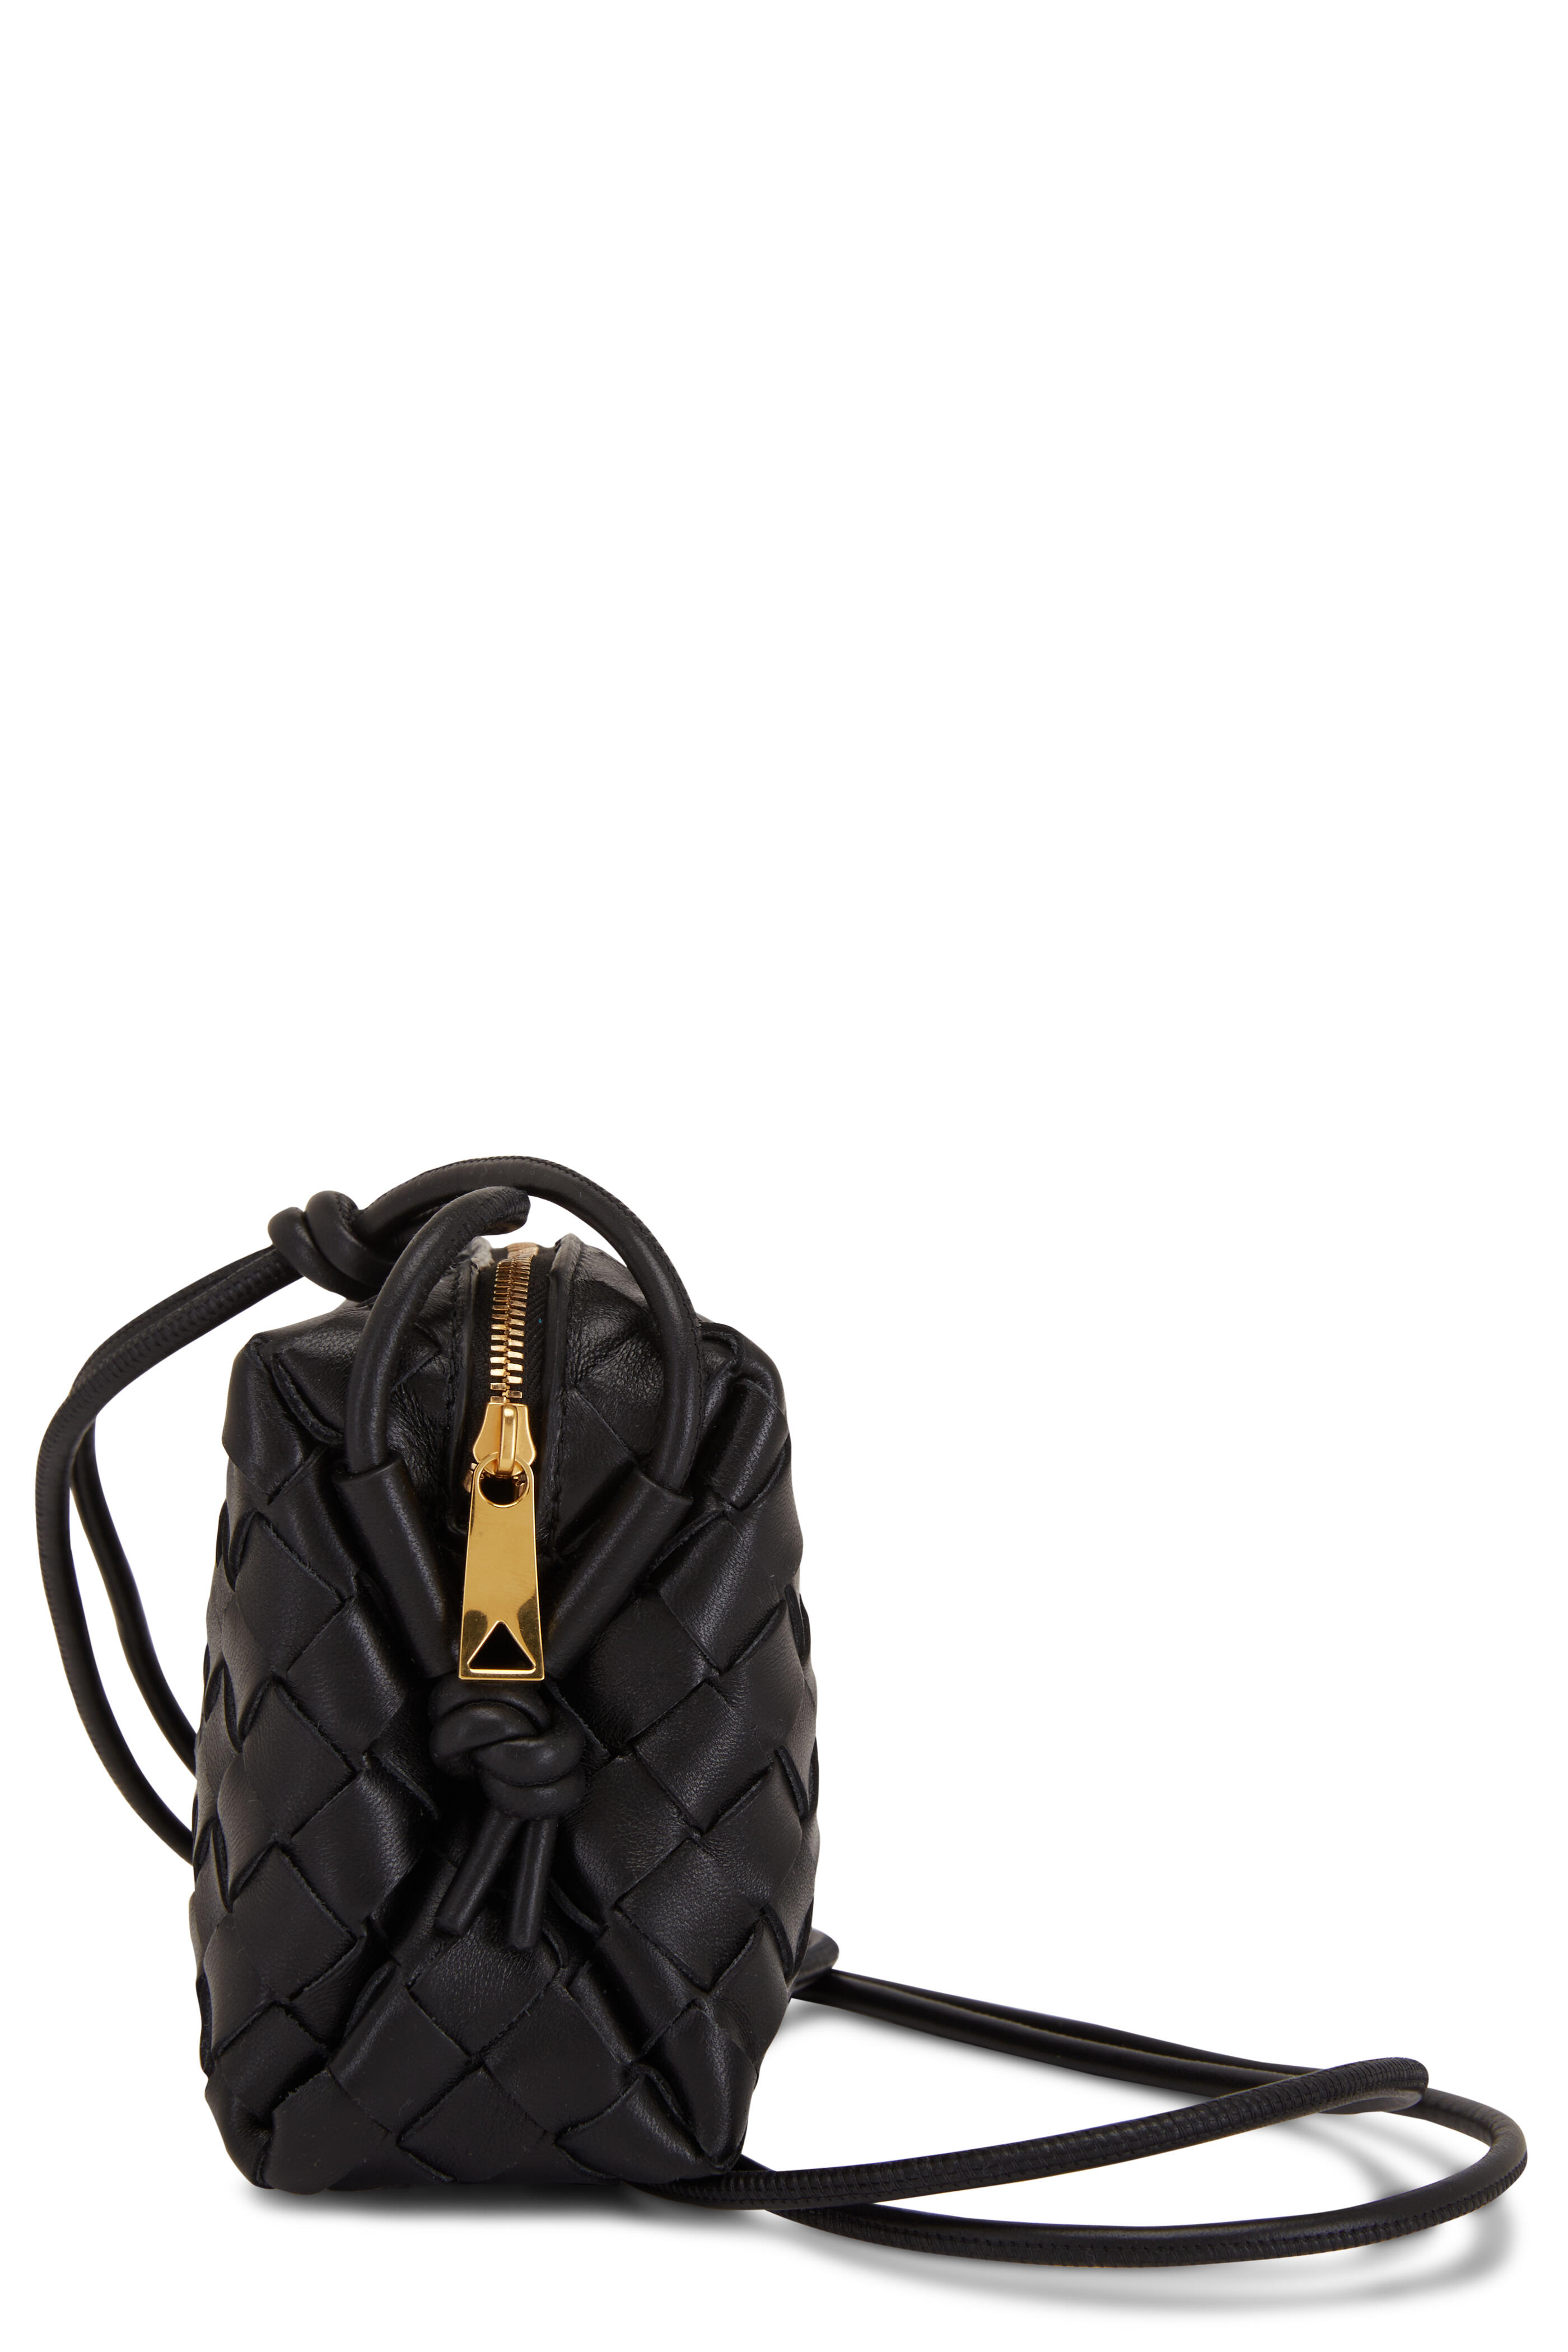 Bottega Veneta Women's Black Woven Leather Mini Camera Bag | by Mitchell Stores